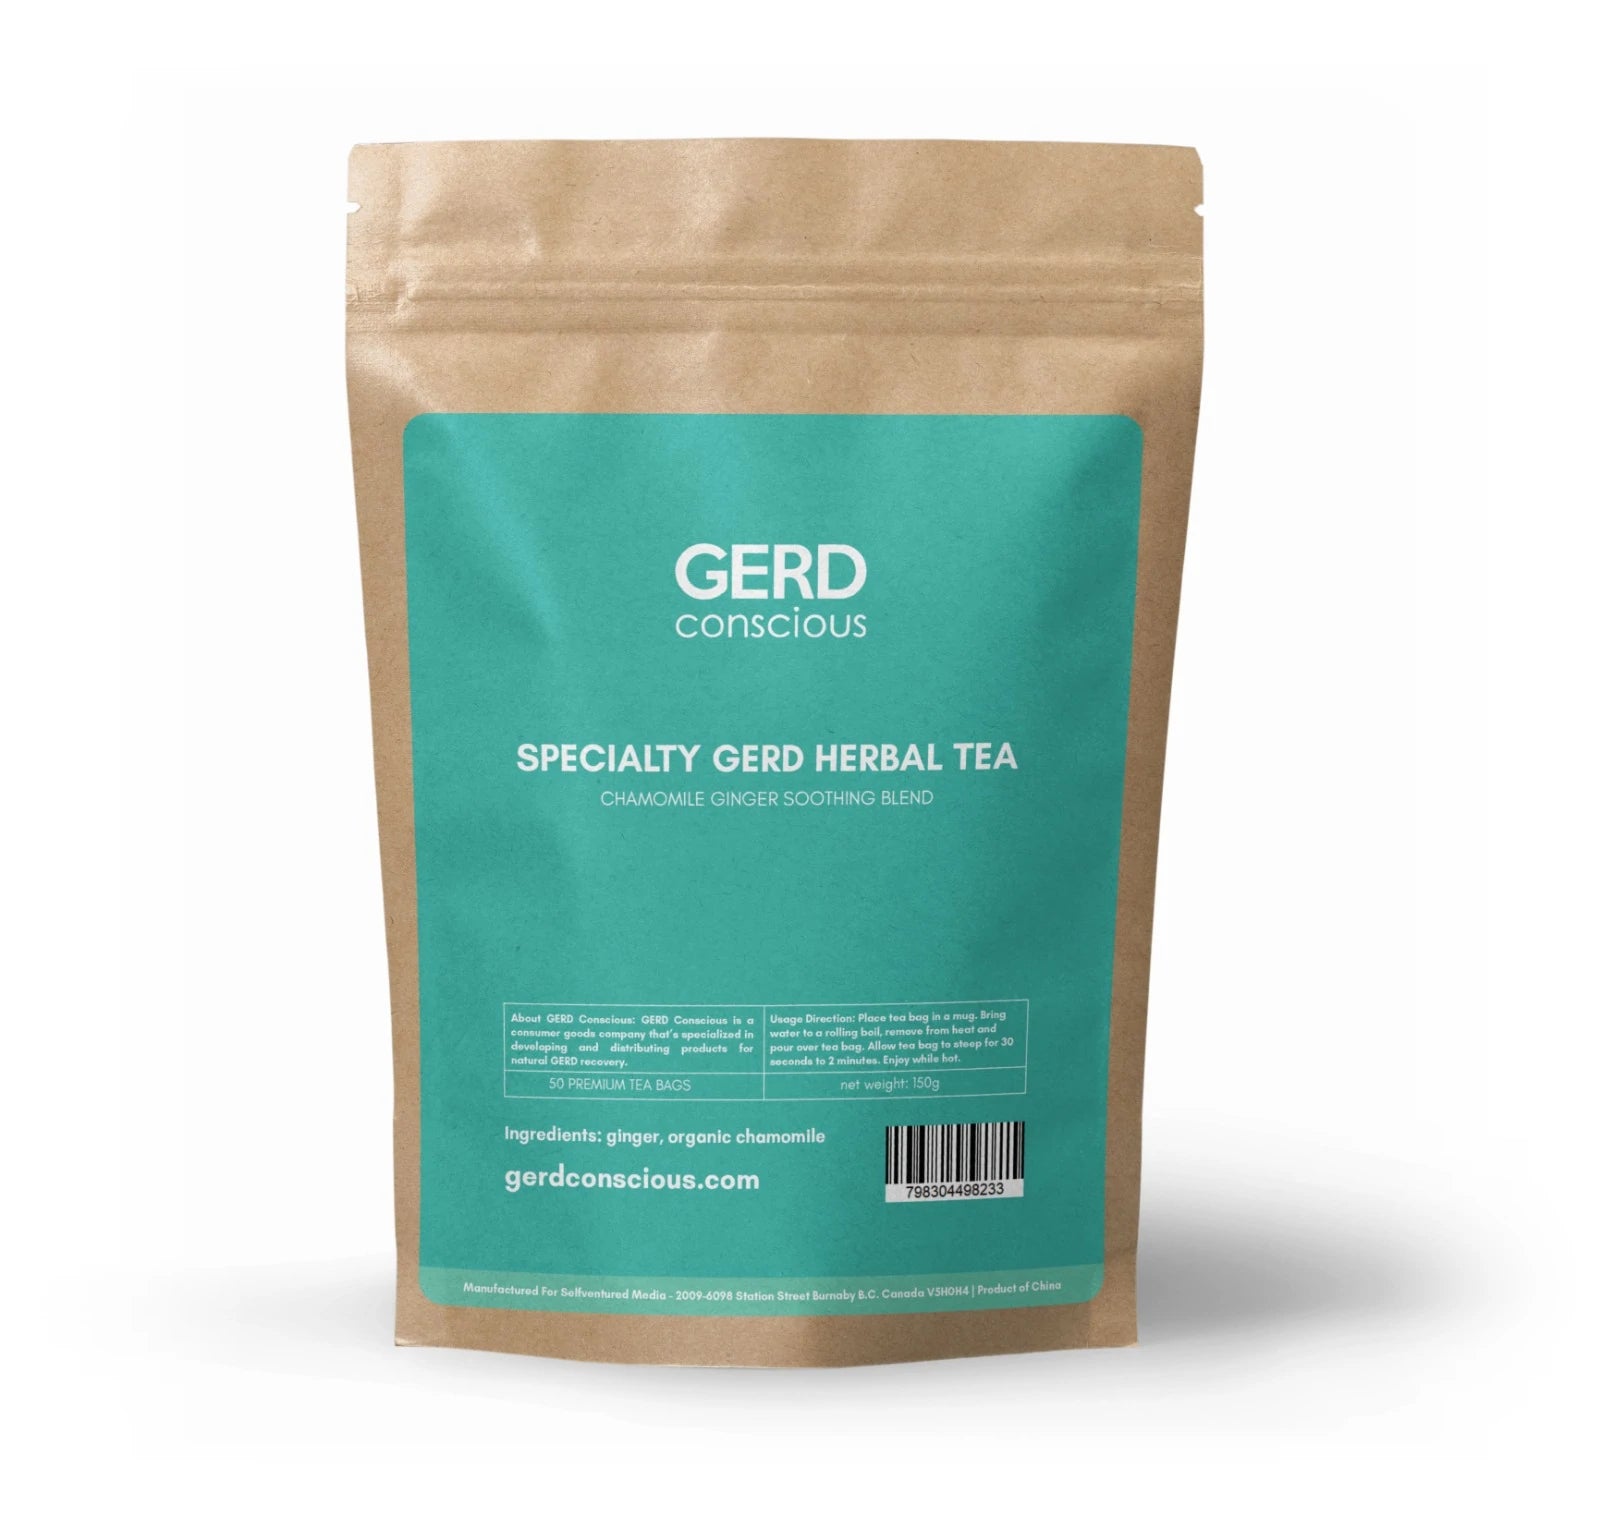 1 packs of GERD Conscious Tea - The Everyday blend